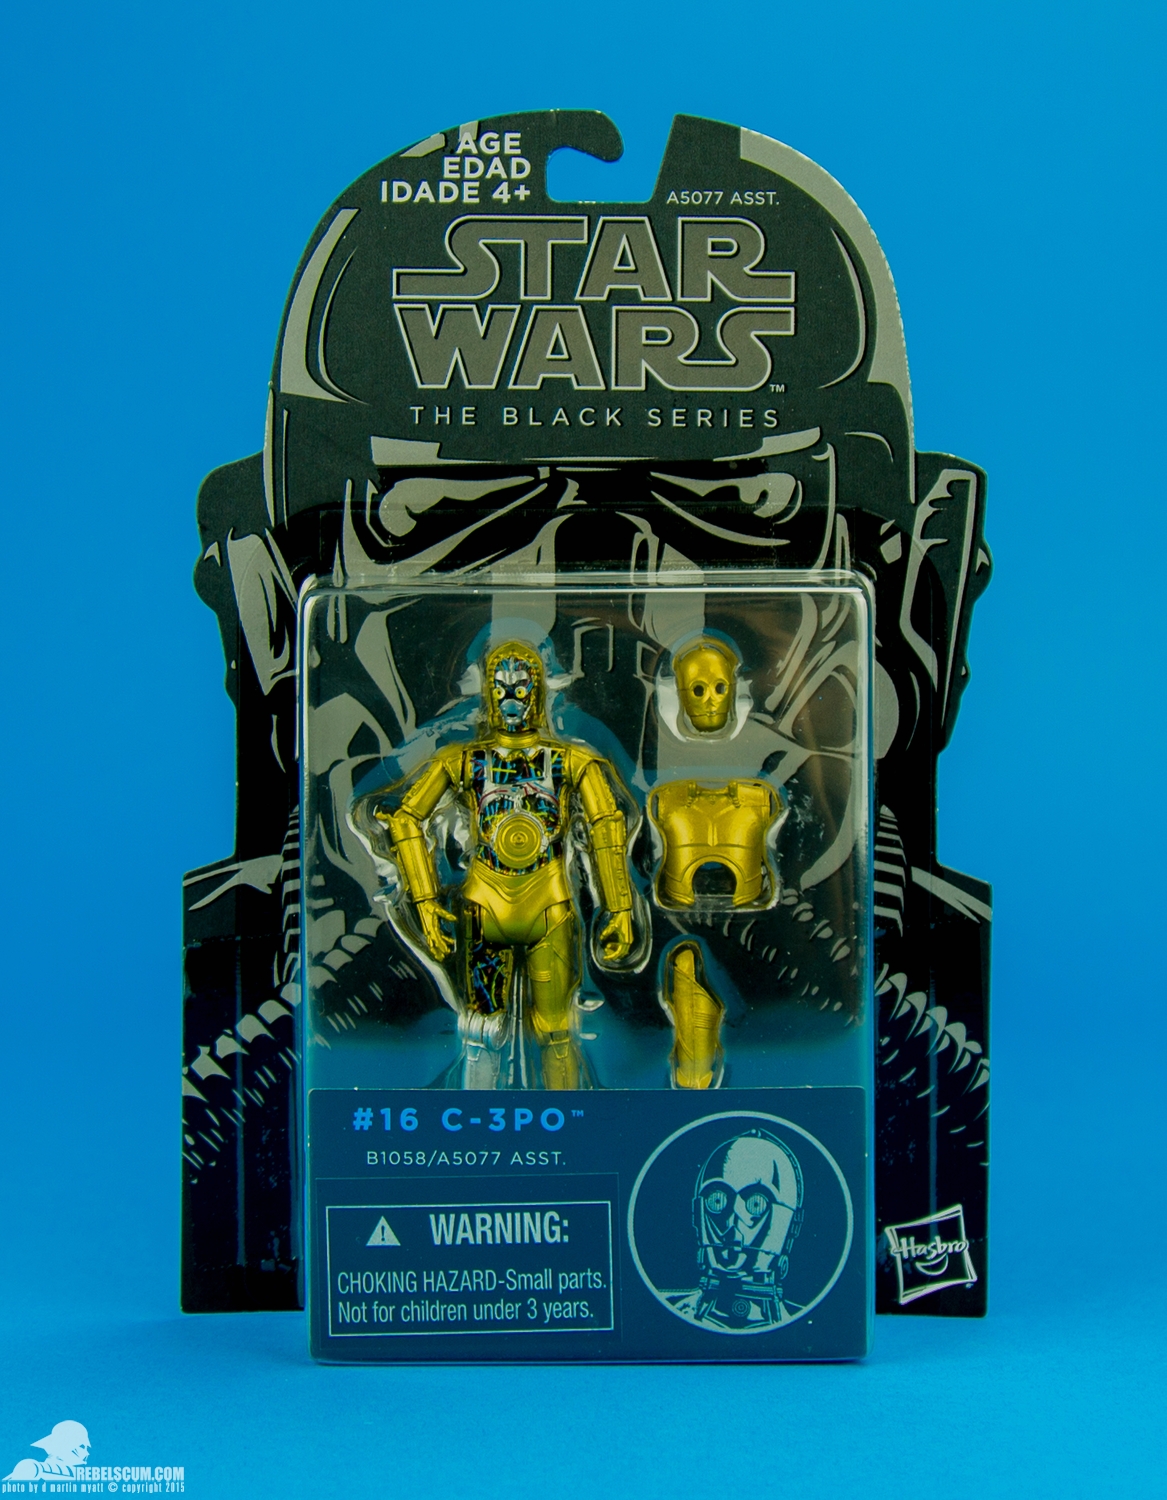 16-C-3PO-The-Black-Series-Star-Wars-009.jpg